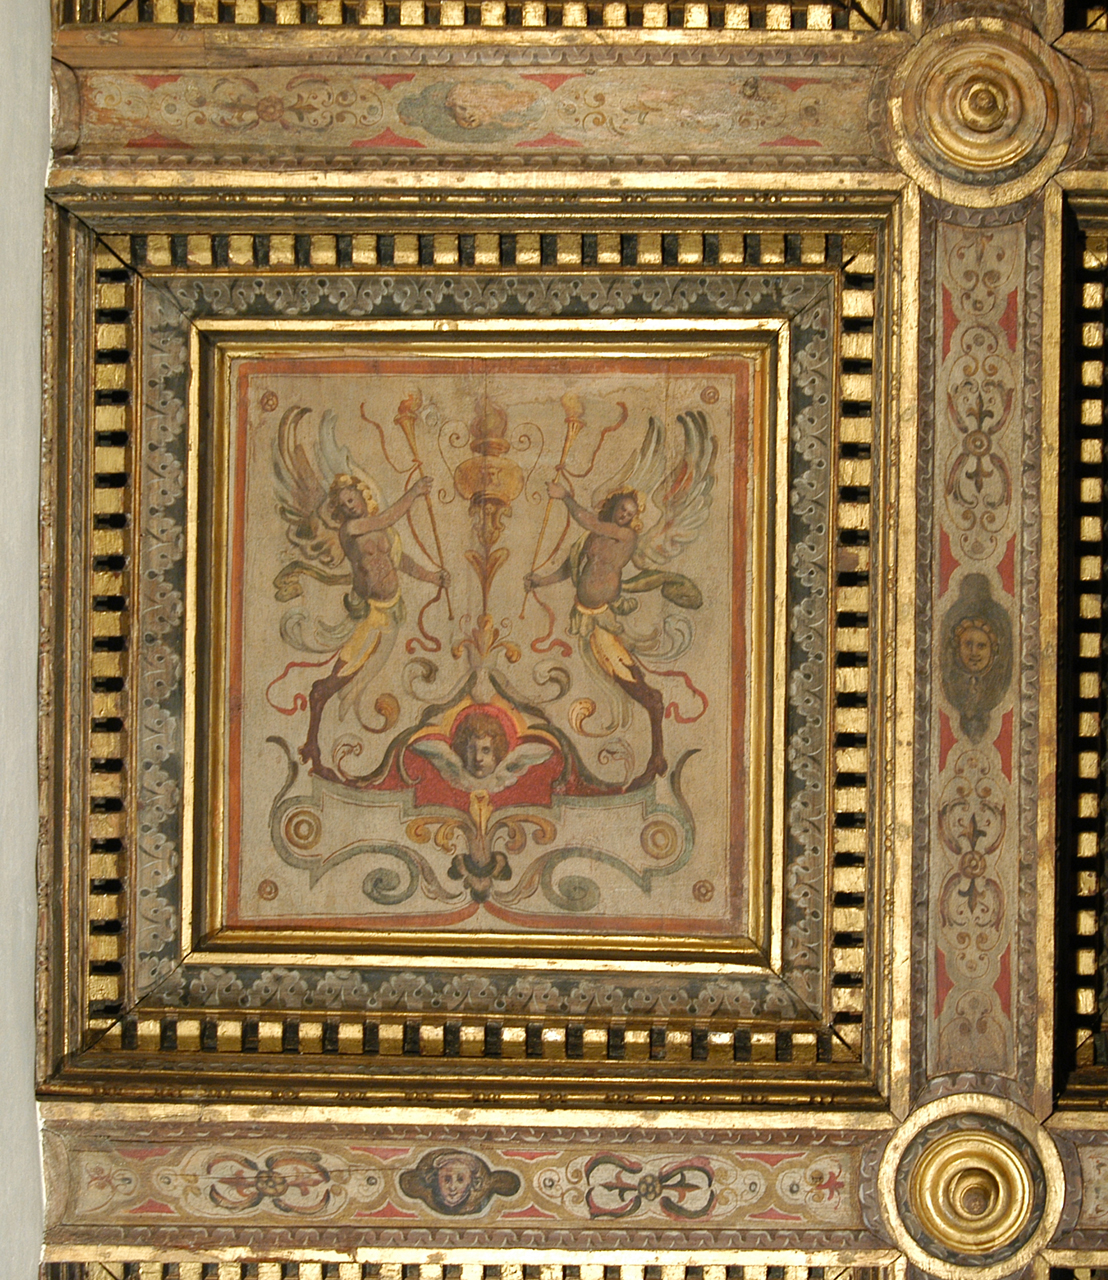 figure fantastiche con motivi decorativi vegetali (lacunare) di Zuccari Taddeo (sec. XVI)